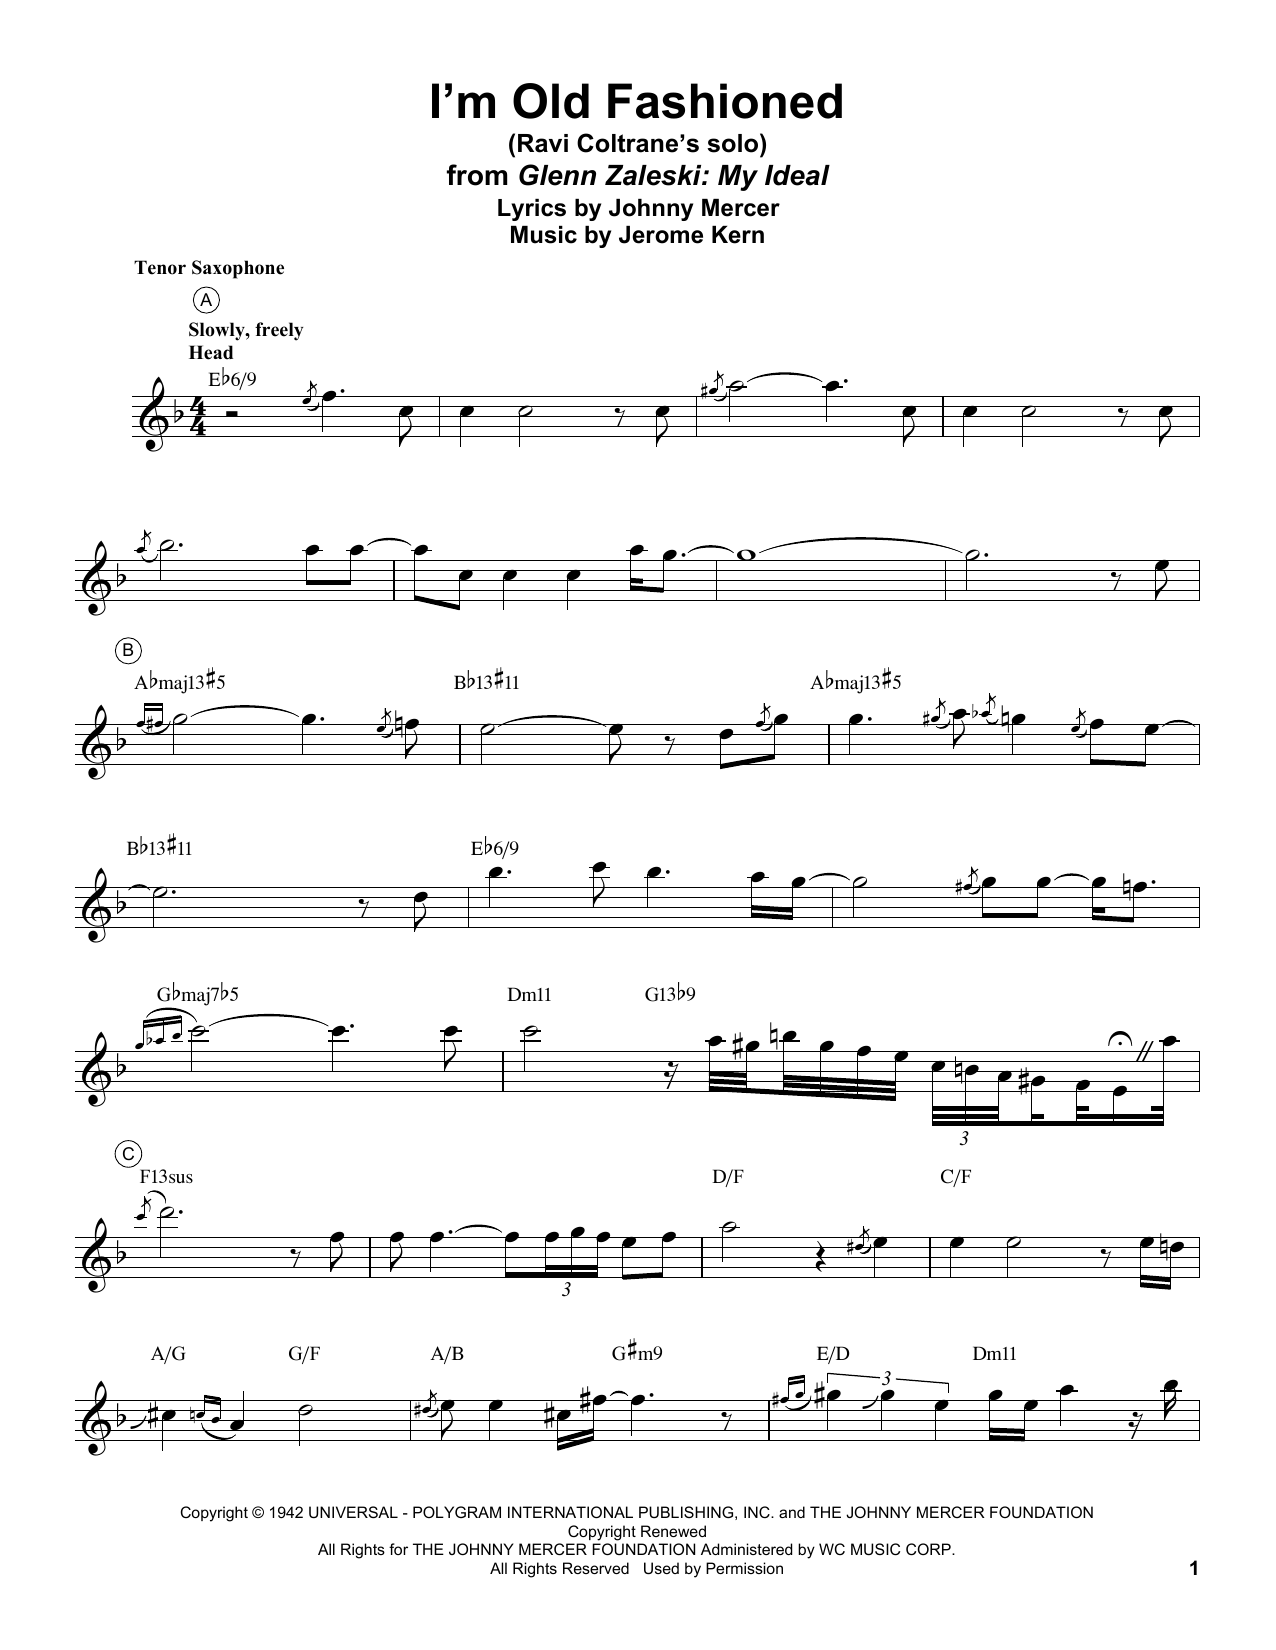 Ravi Coltrane I'm Old Fashioned Sheet Music Notes & Chords for Tenor Sax Transcription - Download or Print PDF